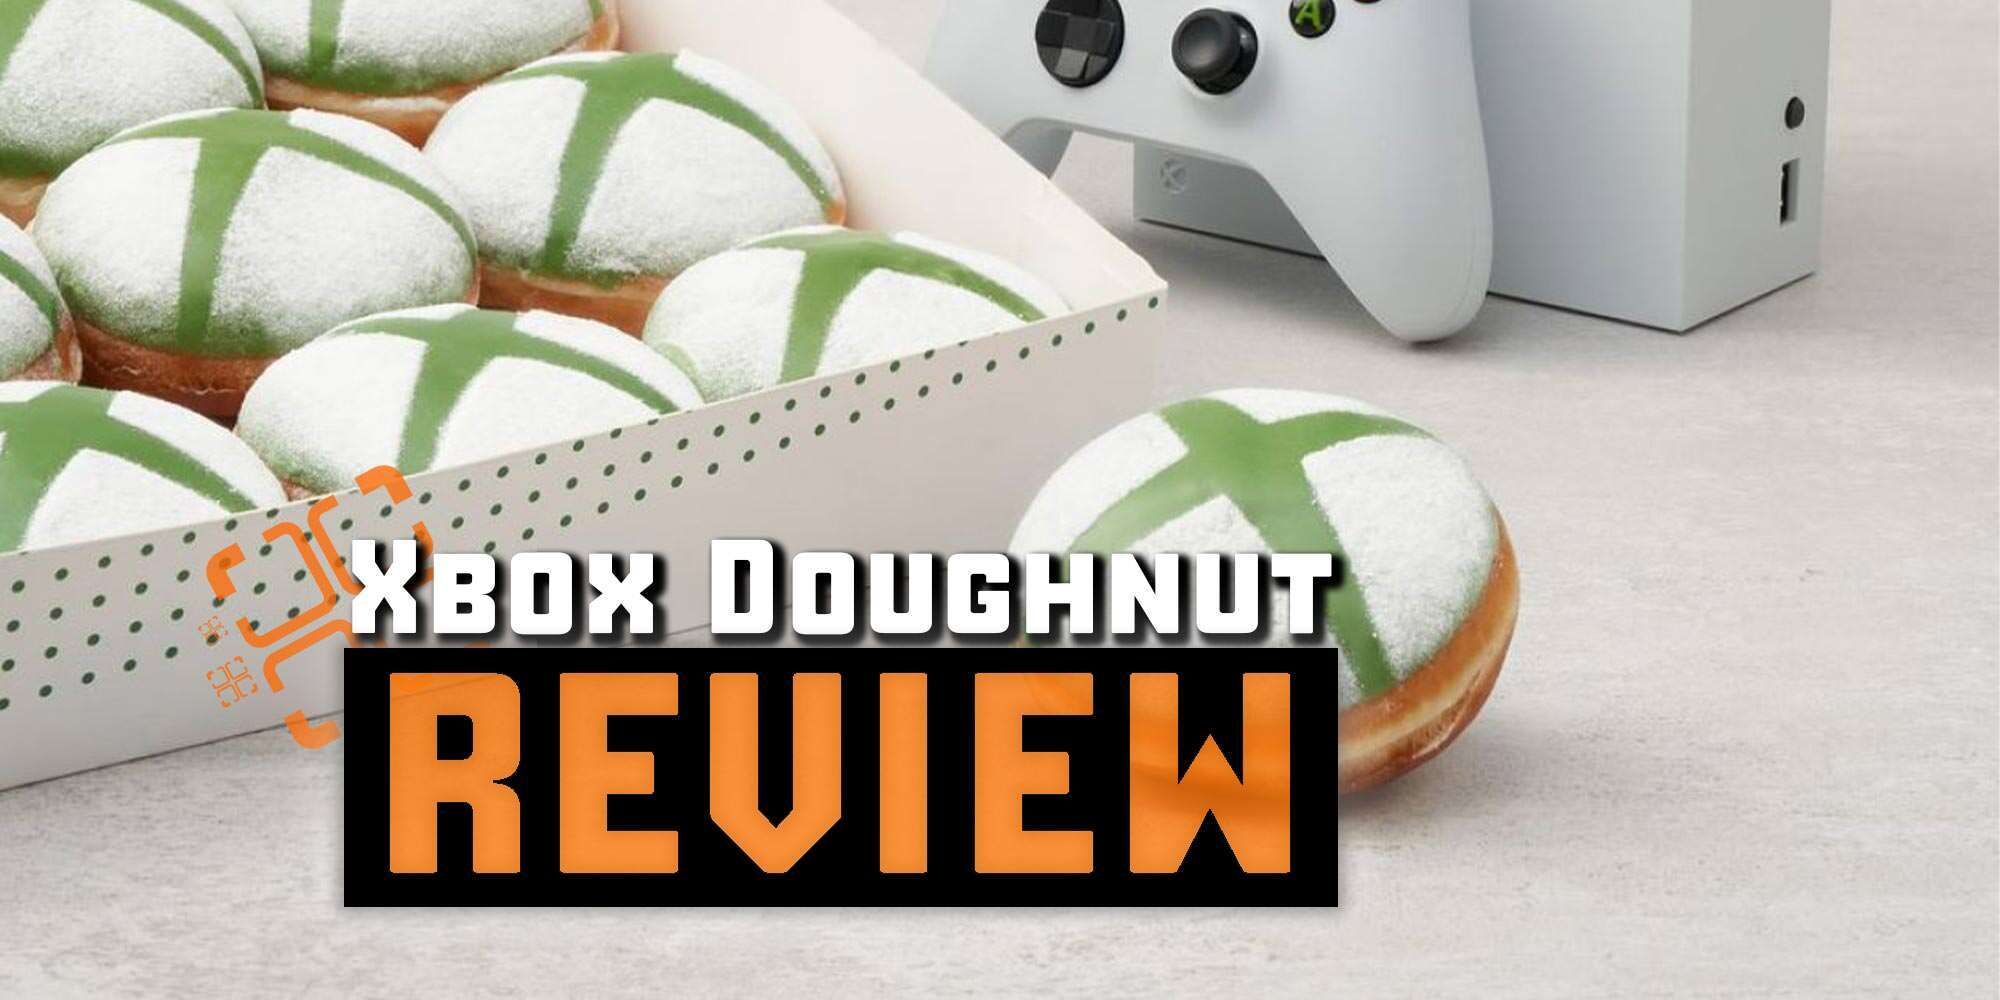 xbox doughtnut review